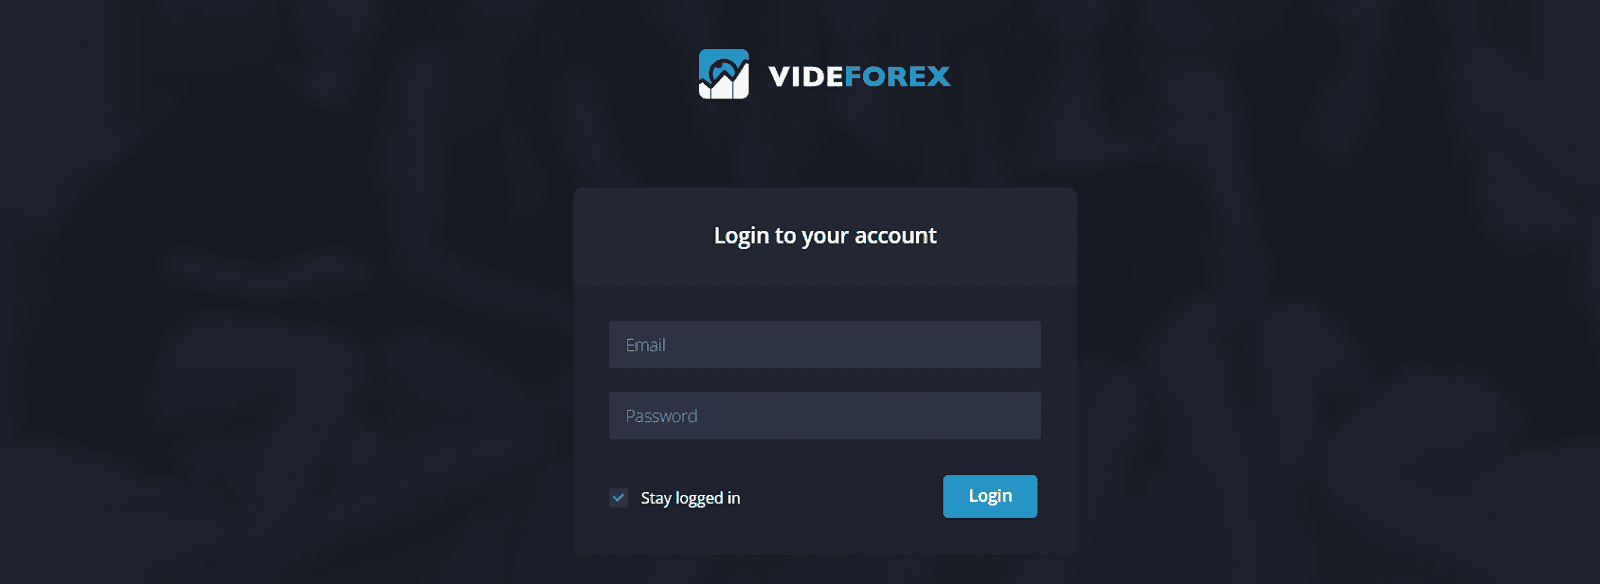 VideForex 综述 - 登录您的个人账户